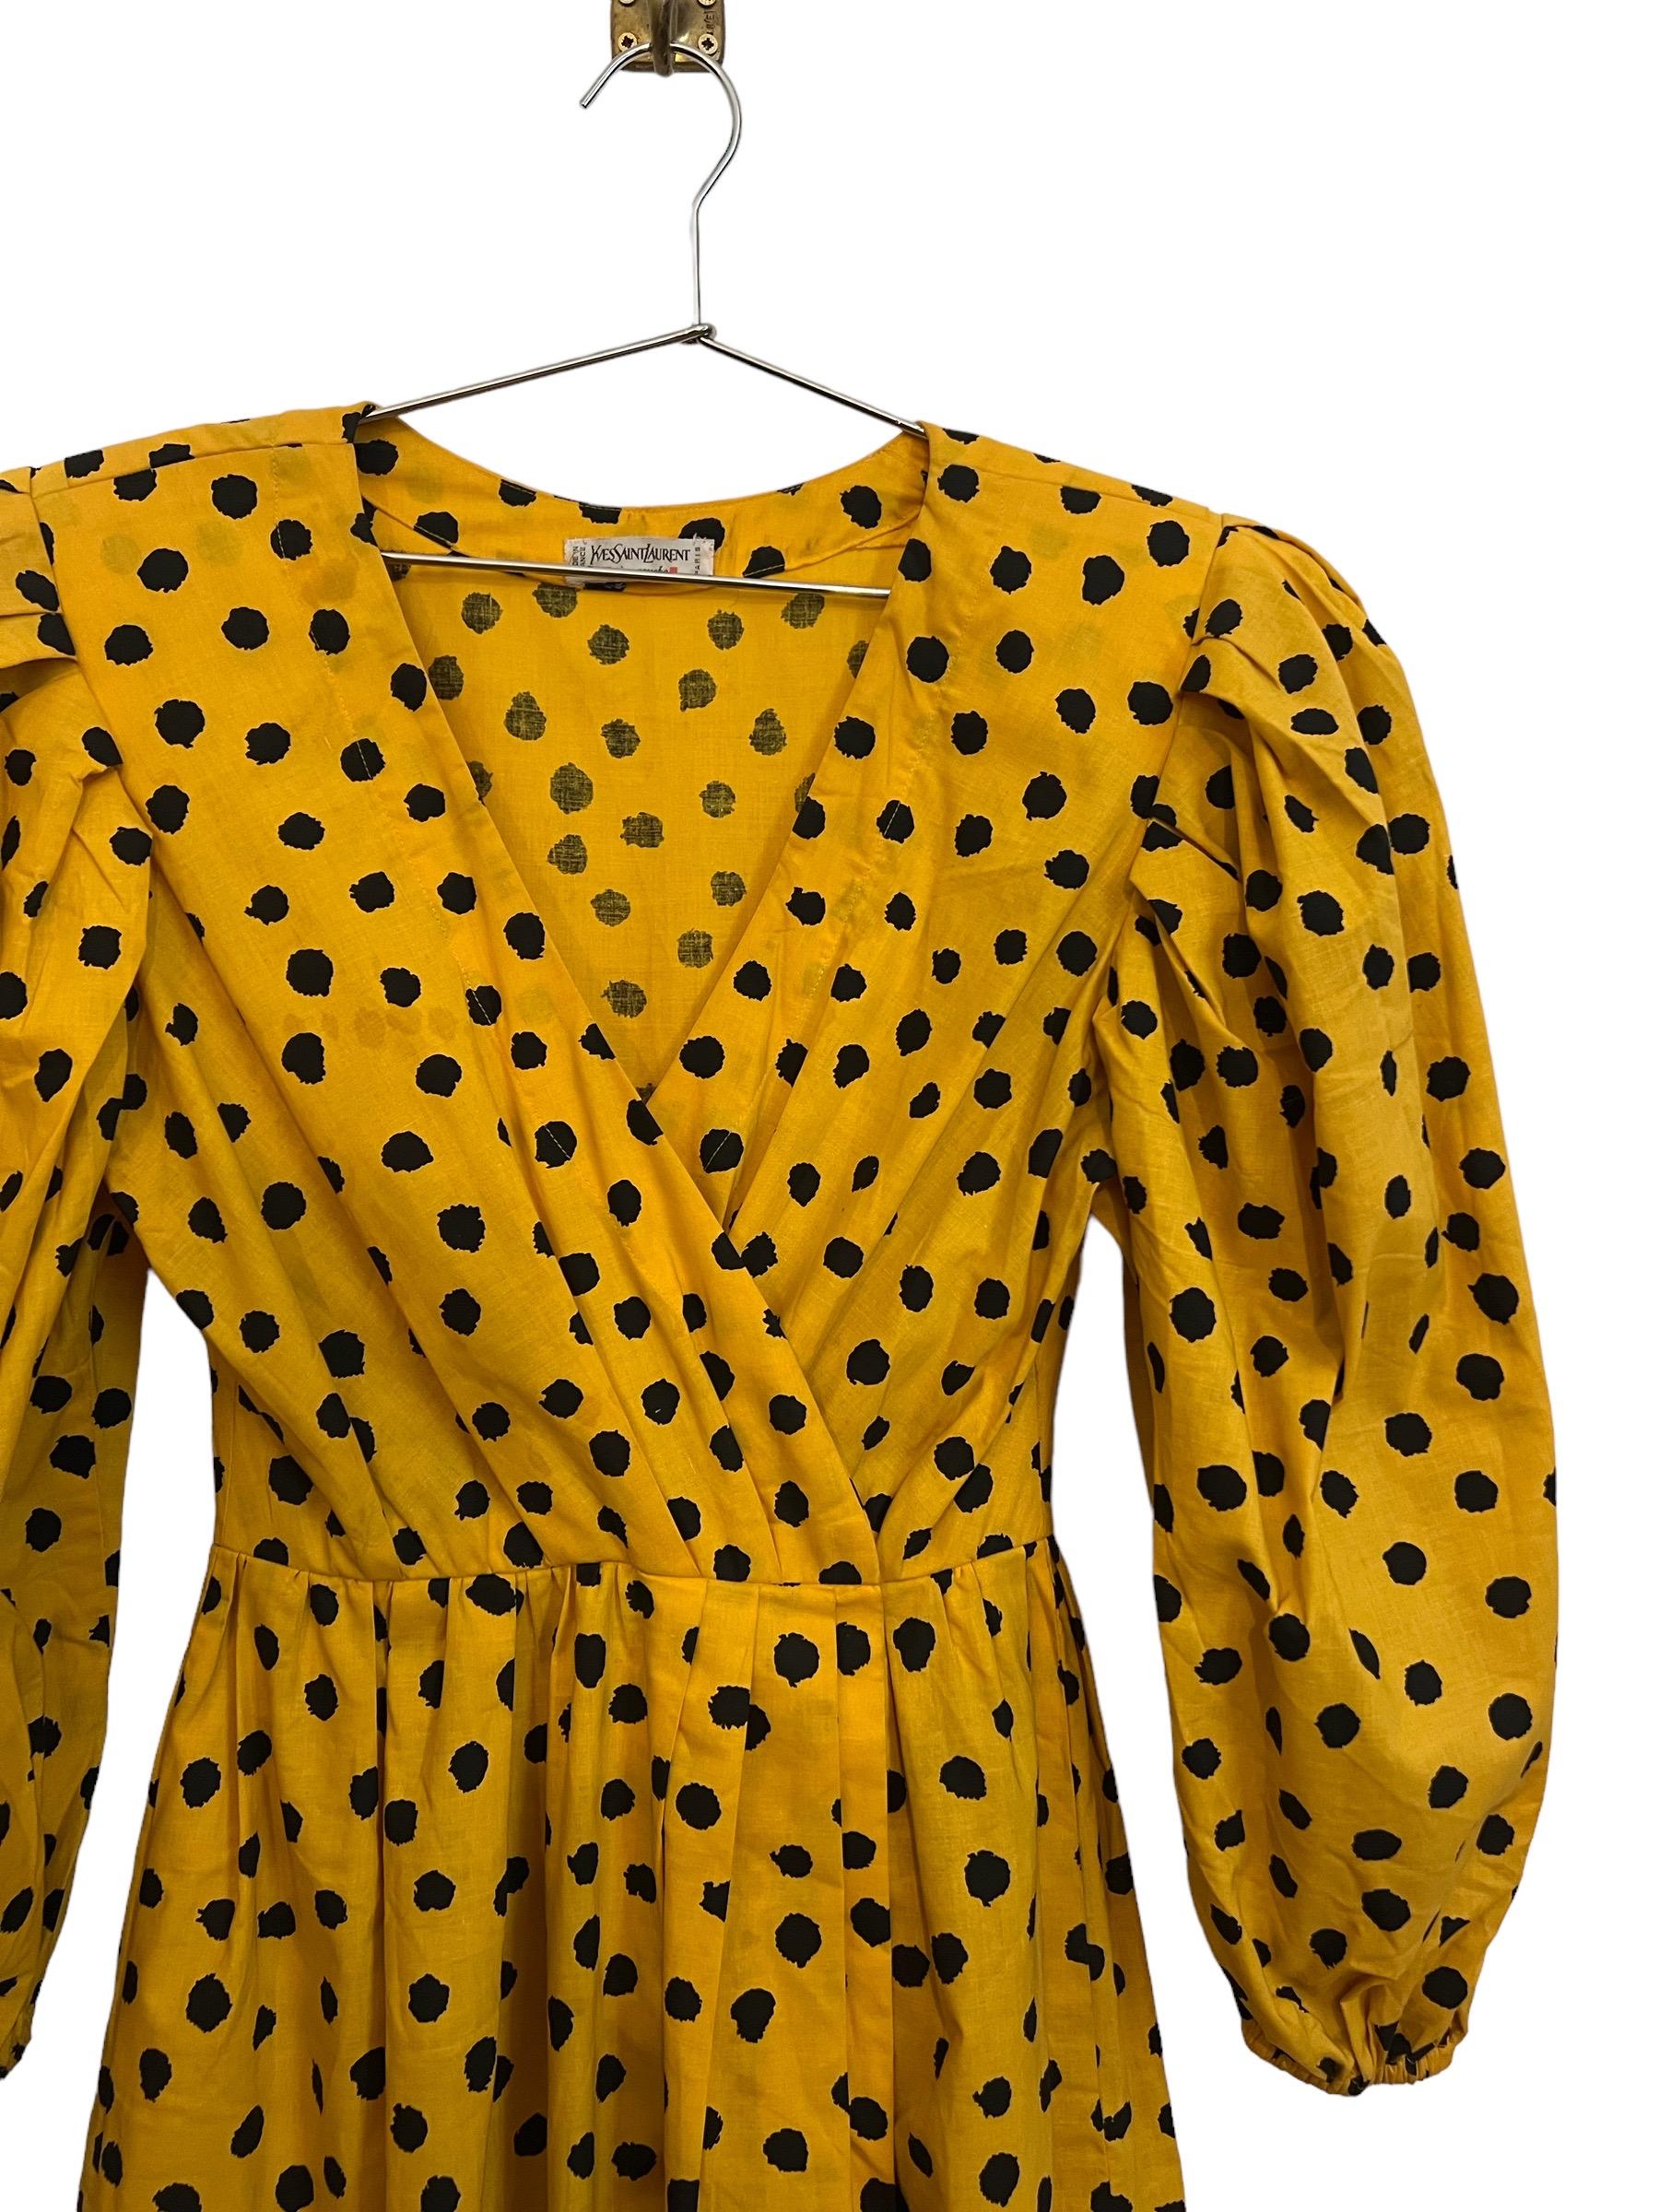 Vintage Yves Saint Laurent Yellow and Black Cotton Polka Dot Dress 2